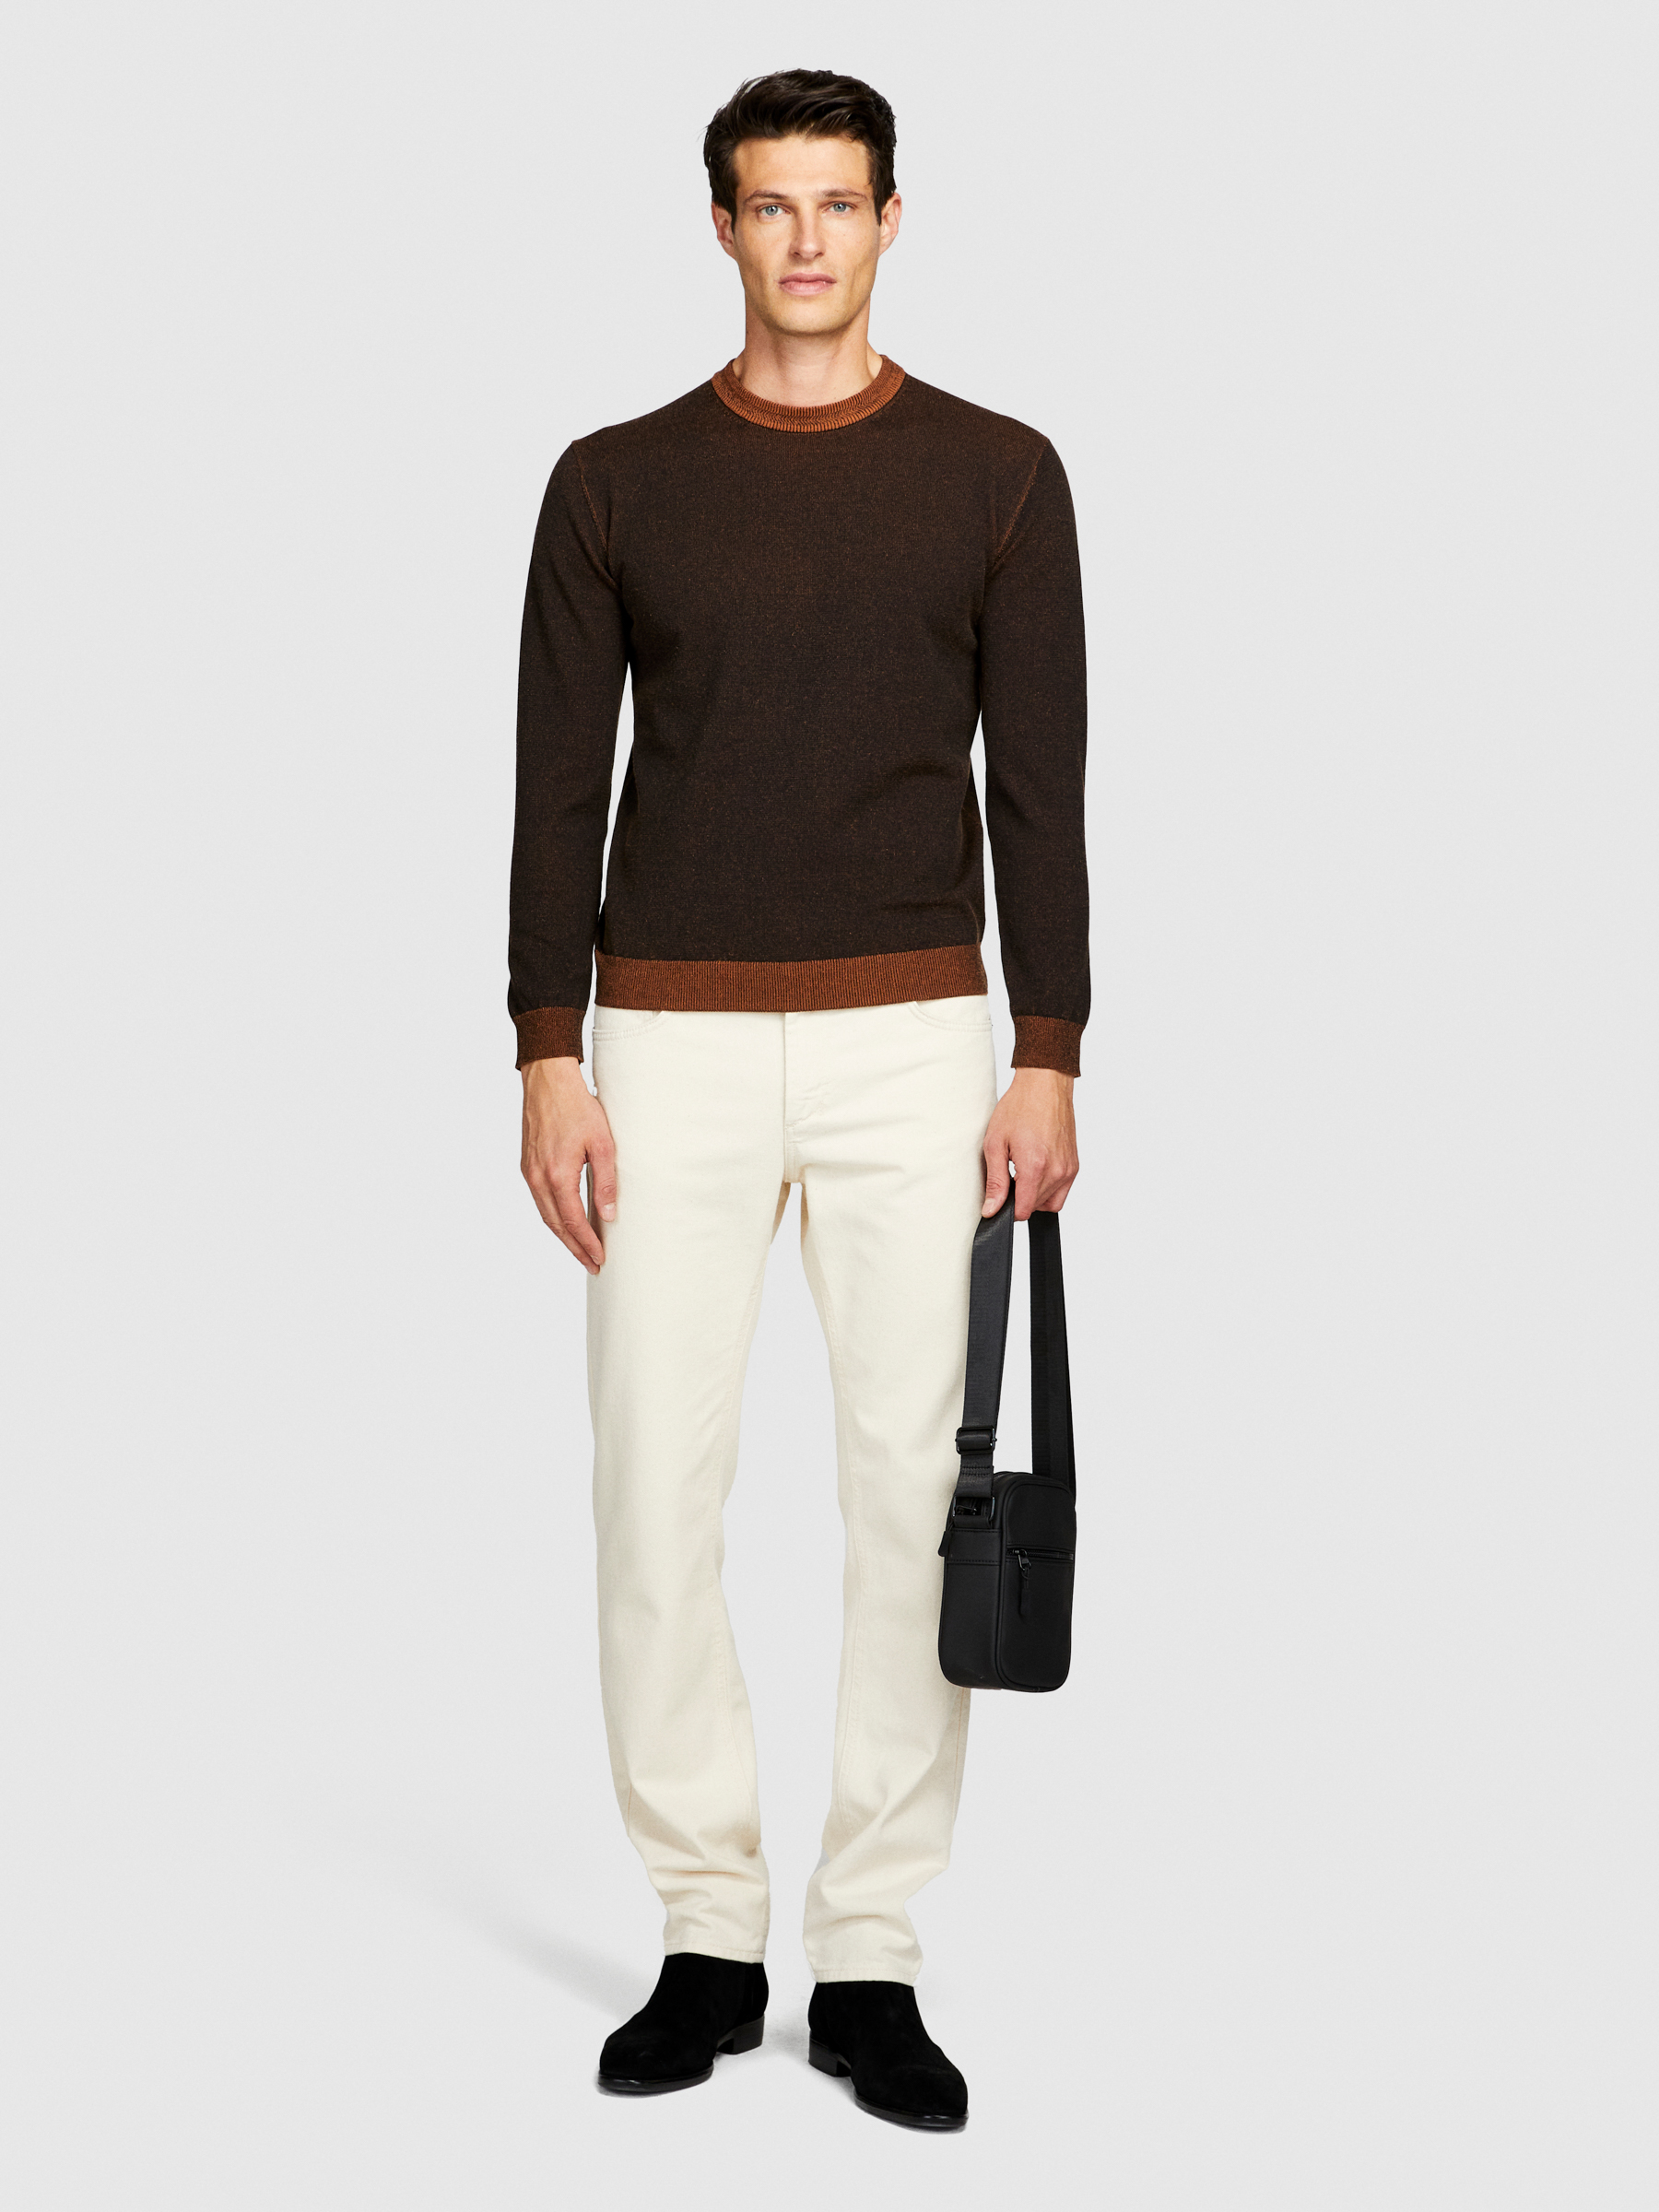 Sisley - Vanise Sweater, Man, Brown, Size: L